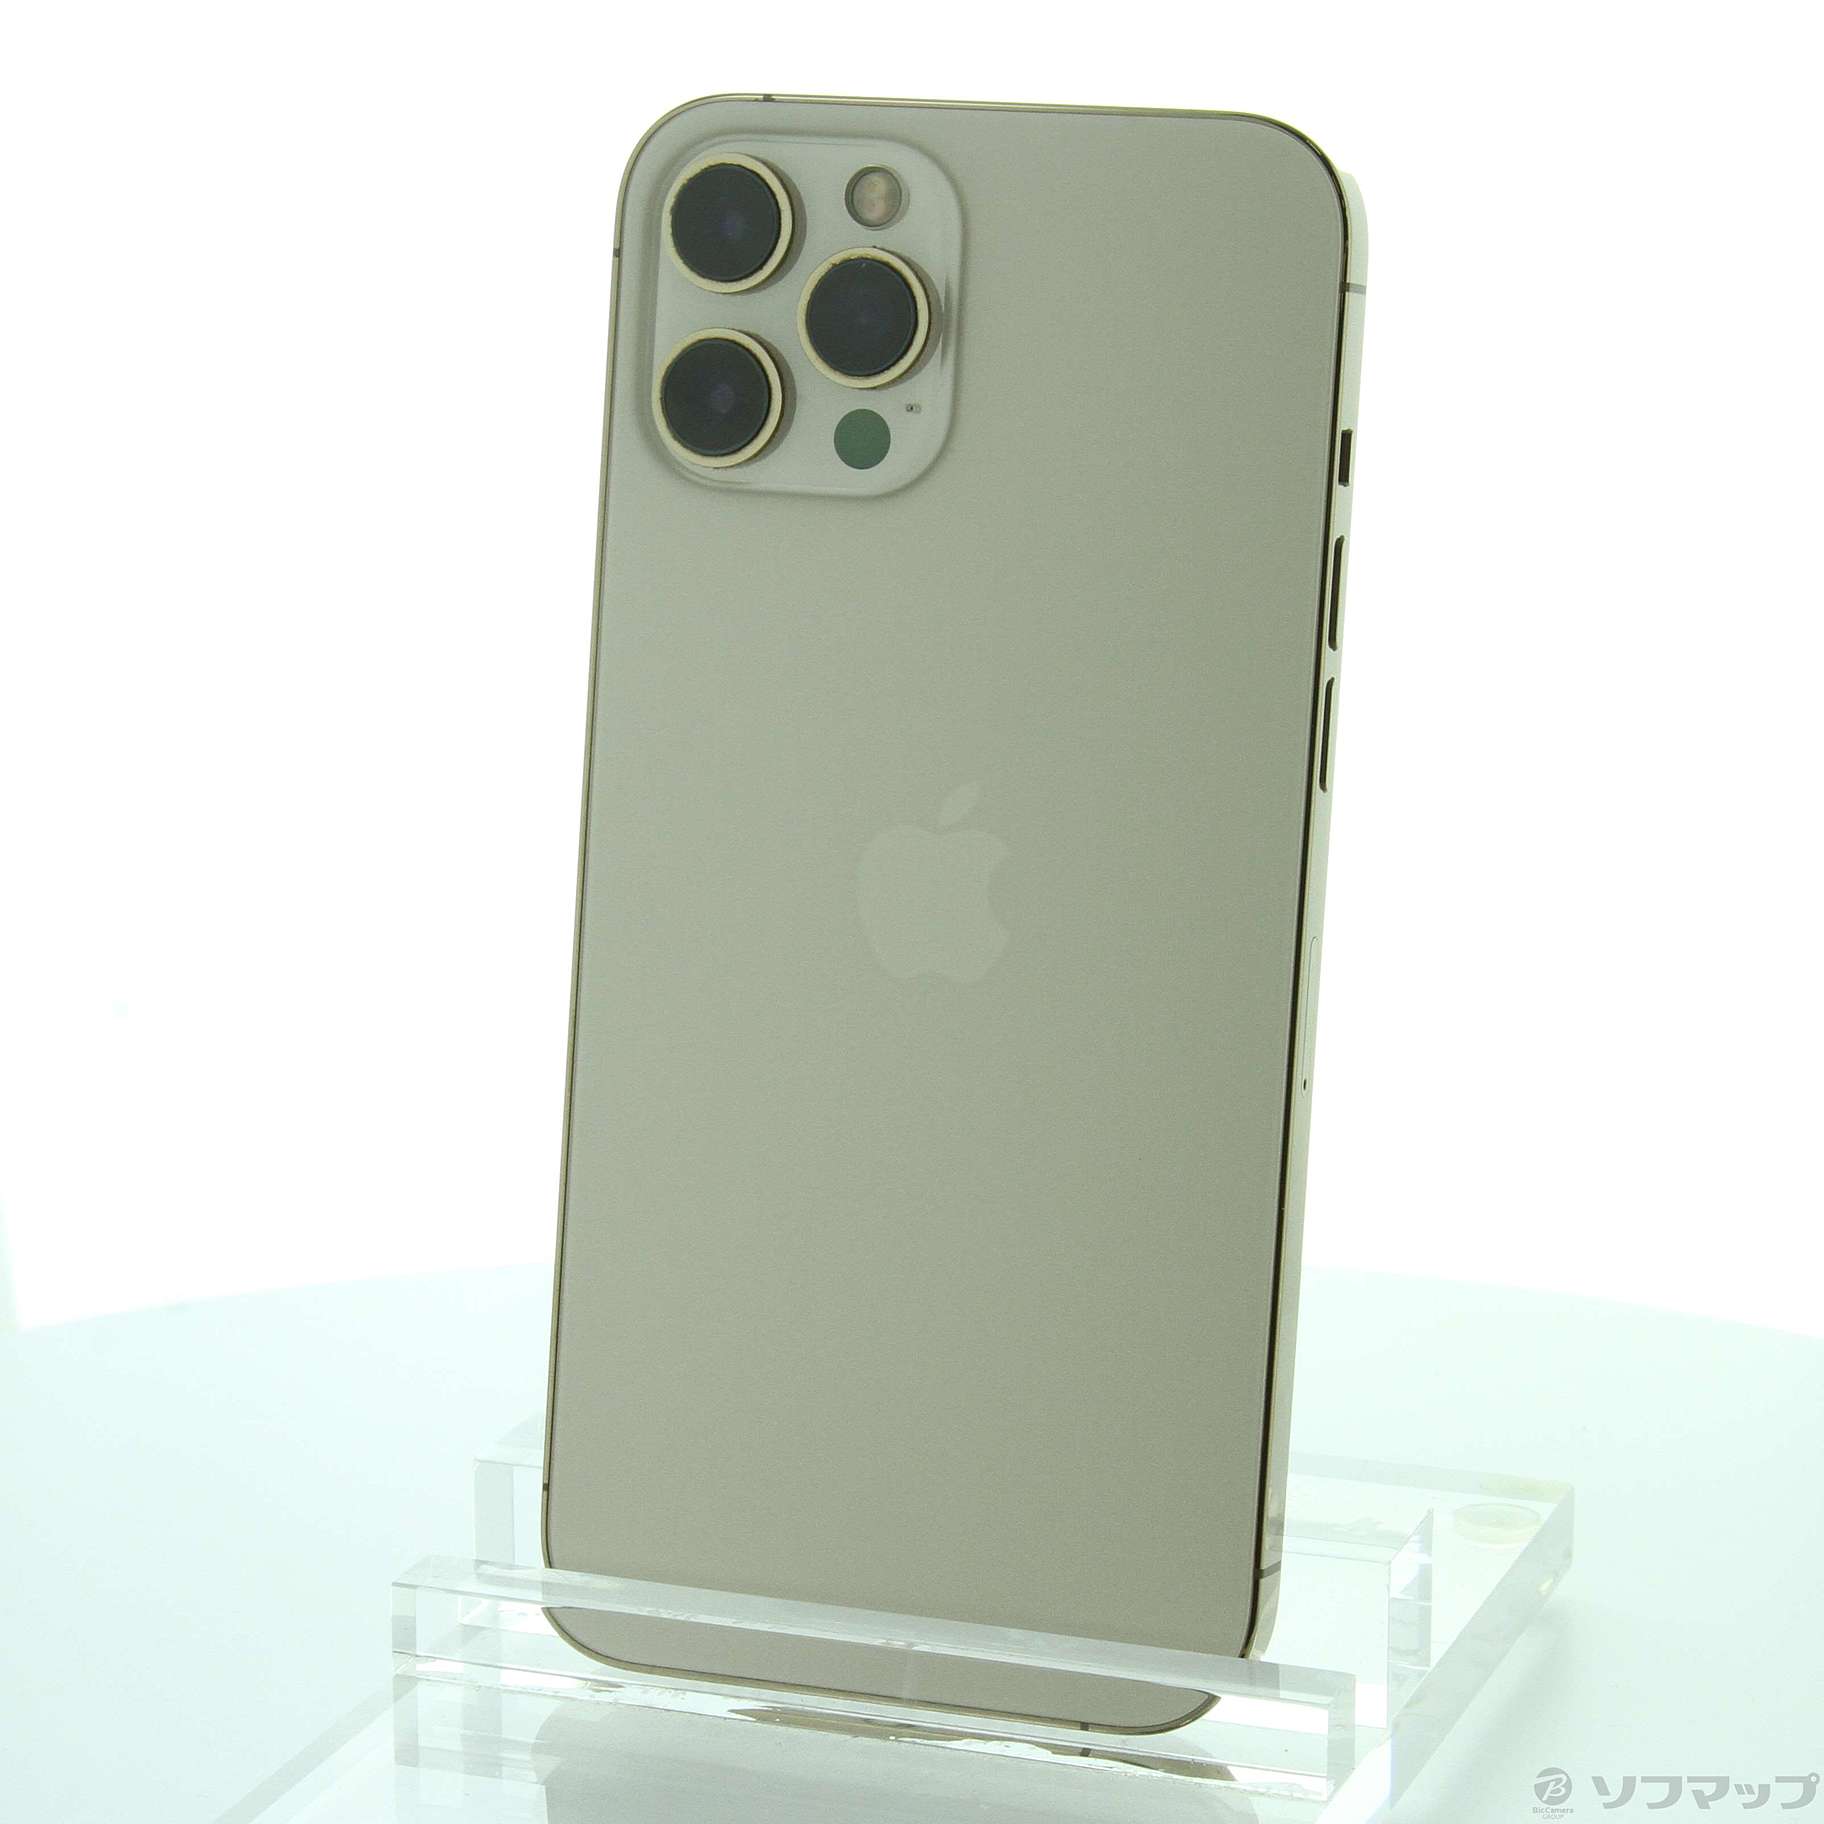 iPhone12 Pro Max 256GB ゴールド SIMフリー